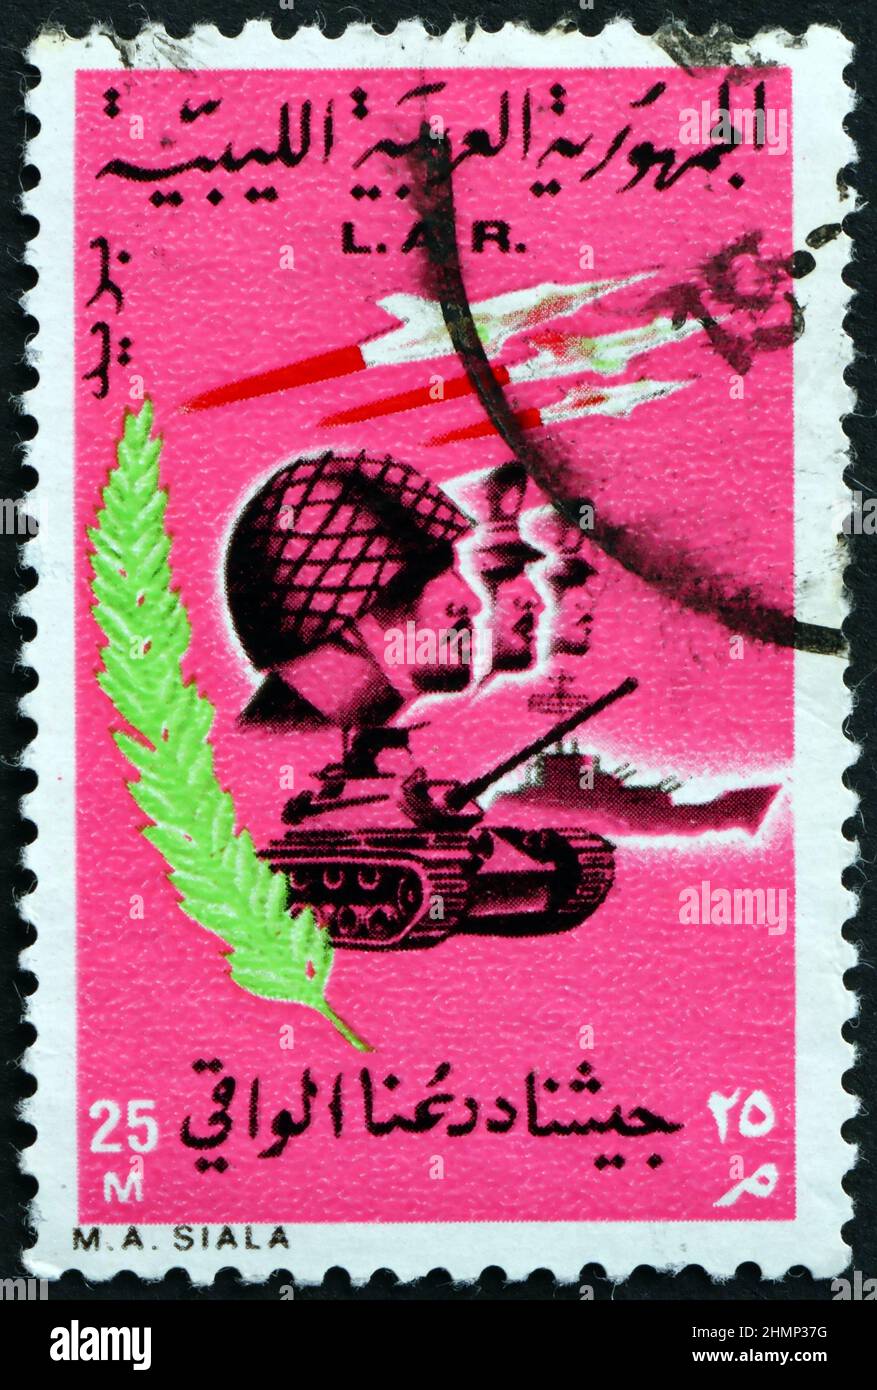 LIBYA - CIRCA 1969: a stamp printed in Libya shows Soldiers, Tanks and Planes, Establishment of Libyan Arab Republic, September 1, 1969, circa 1969 Stock Photo